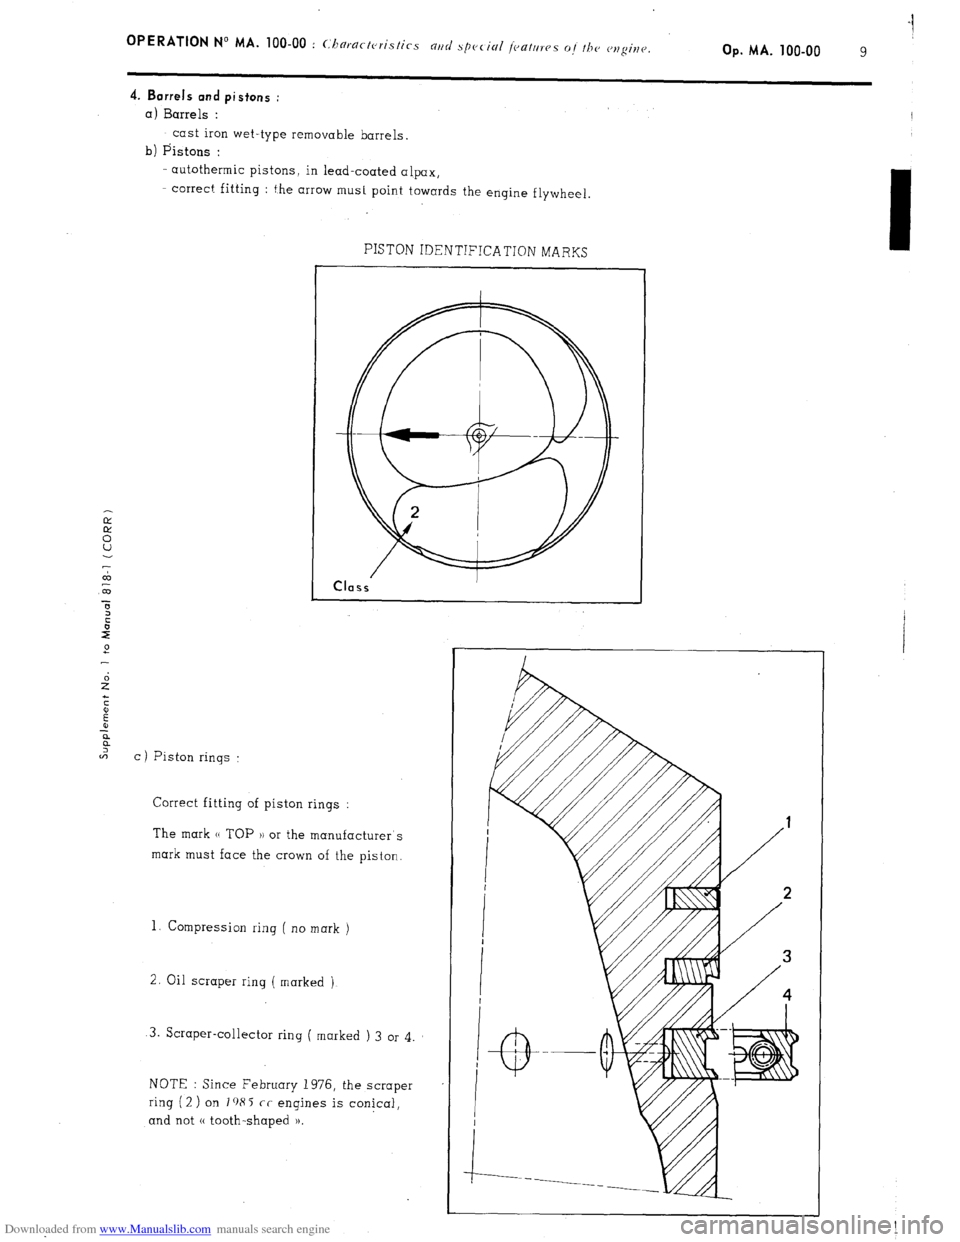 Citroen CX 1981 1.G Workshop Manual Downloaded from www.Manualslib.com manuals search engine OPERATION N” MA. 100-00 : (:hnractc,ri.stics arid specinl j(,atrlres o,/ the> cl,gi?lcJ. Op. MA. 100-00 1 
9 
4. Barrels and pistons : 
a) 
B